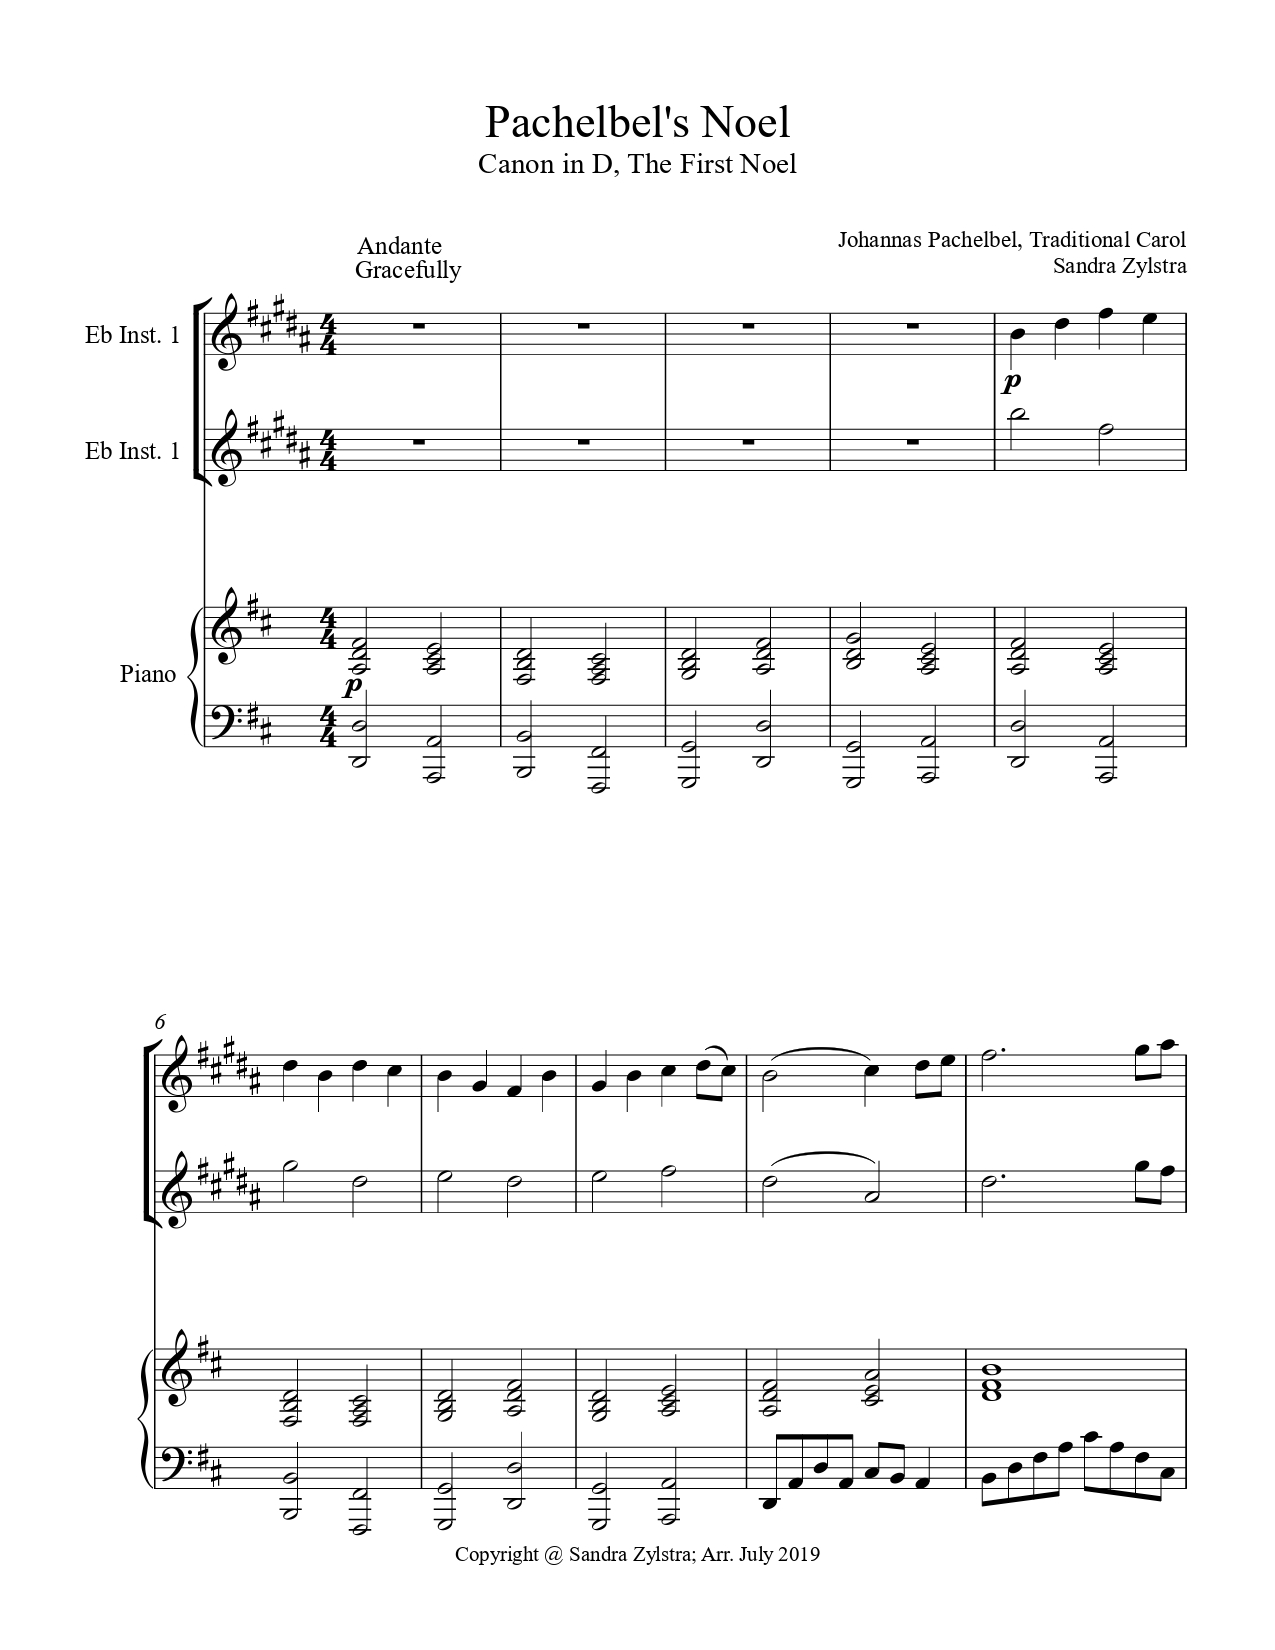 Pachelbels Noel Eb instrument duet parts cover page 00021